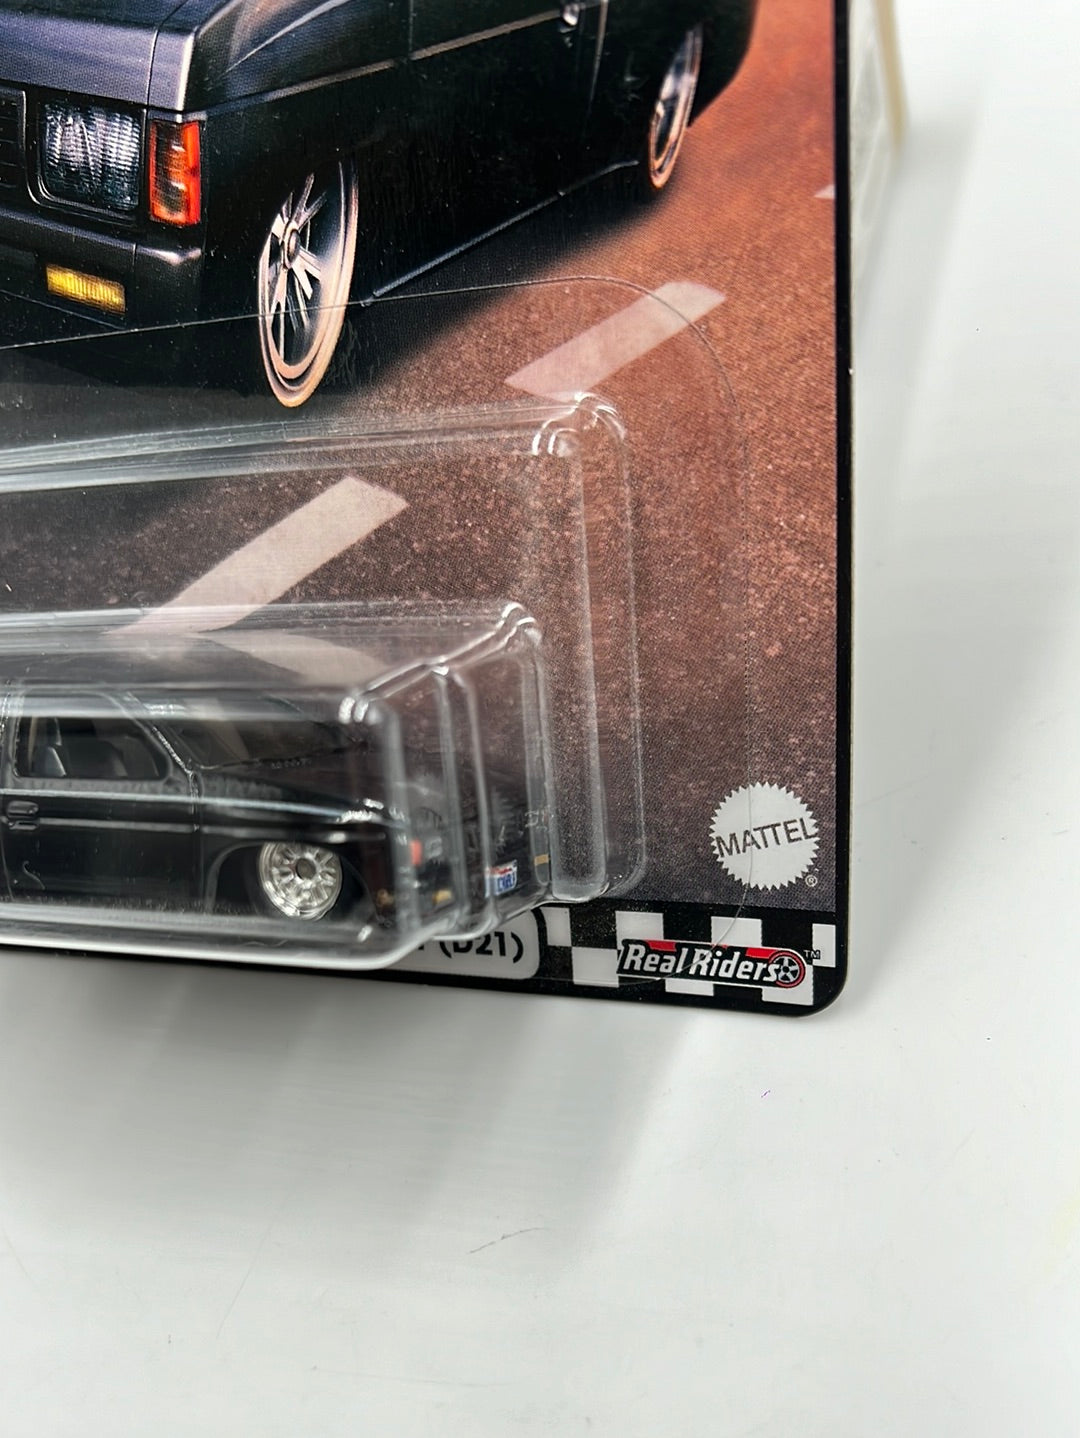 Hot Wheels Premium Boulevard #38 Custom ‘93 Nissan Hardbody (D21)